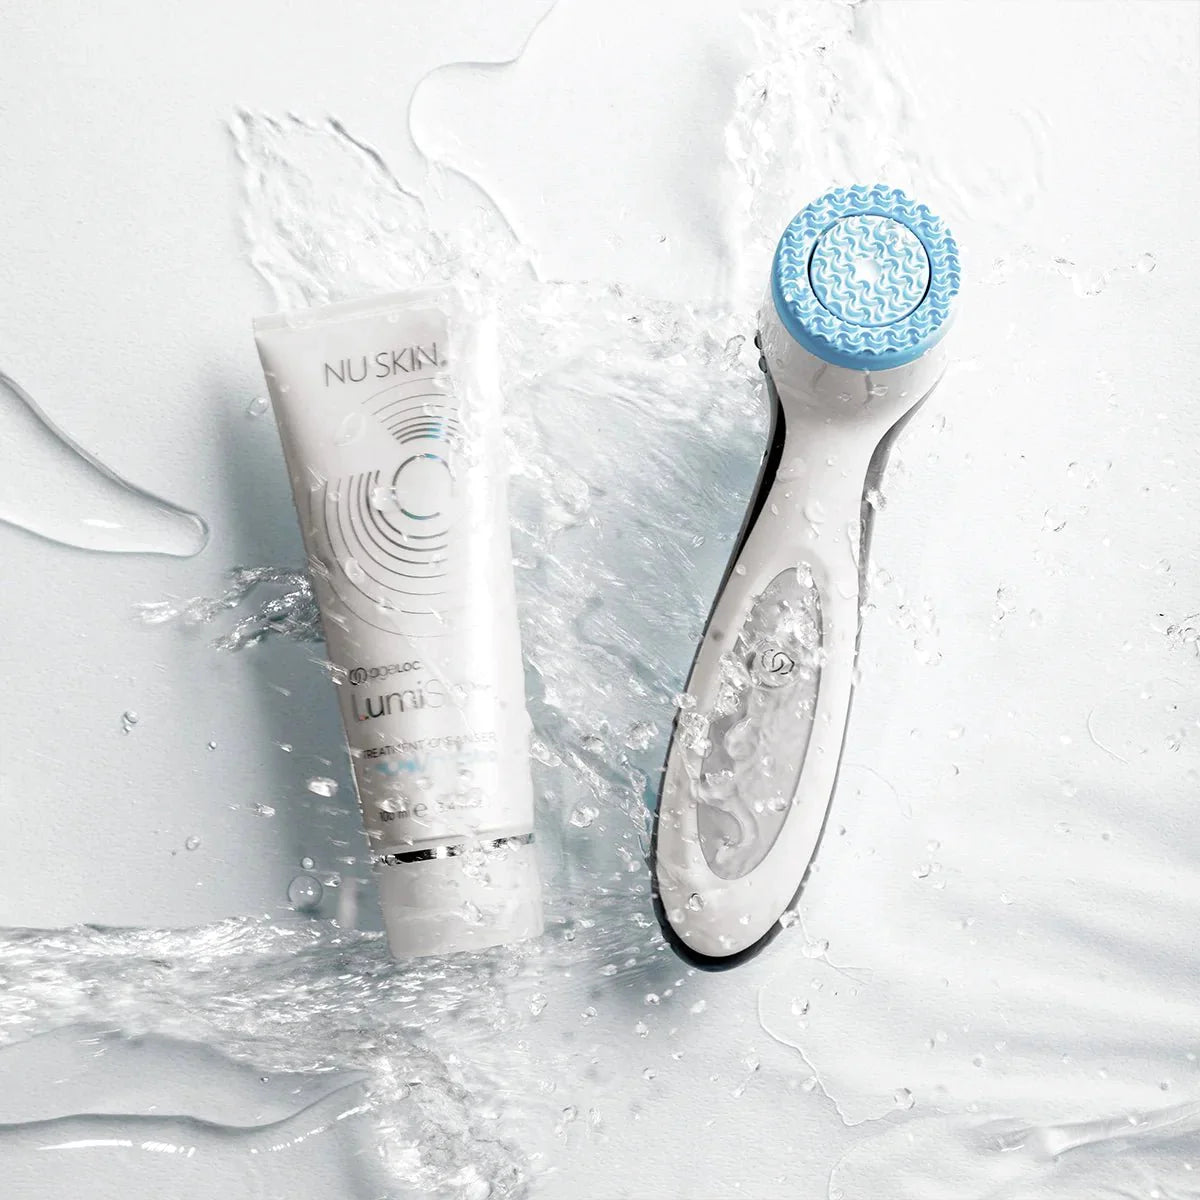 Nu Skin ageLOC® LumiSpa Activating Face Cleanser: Piel sensible 100 ml - NewSkinShop